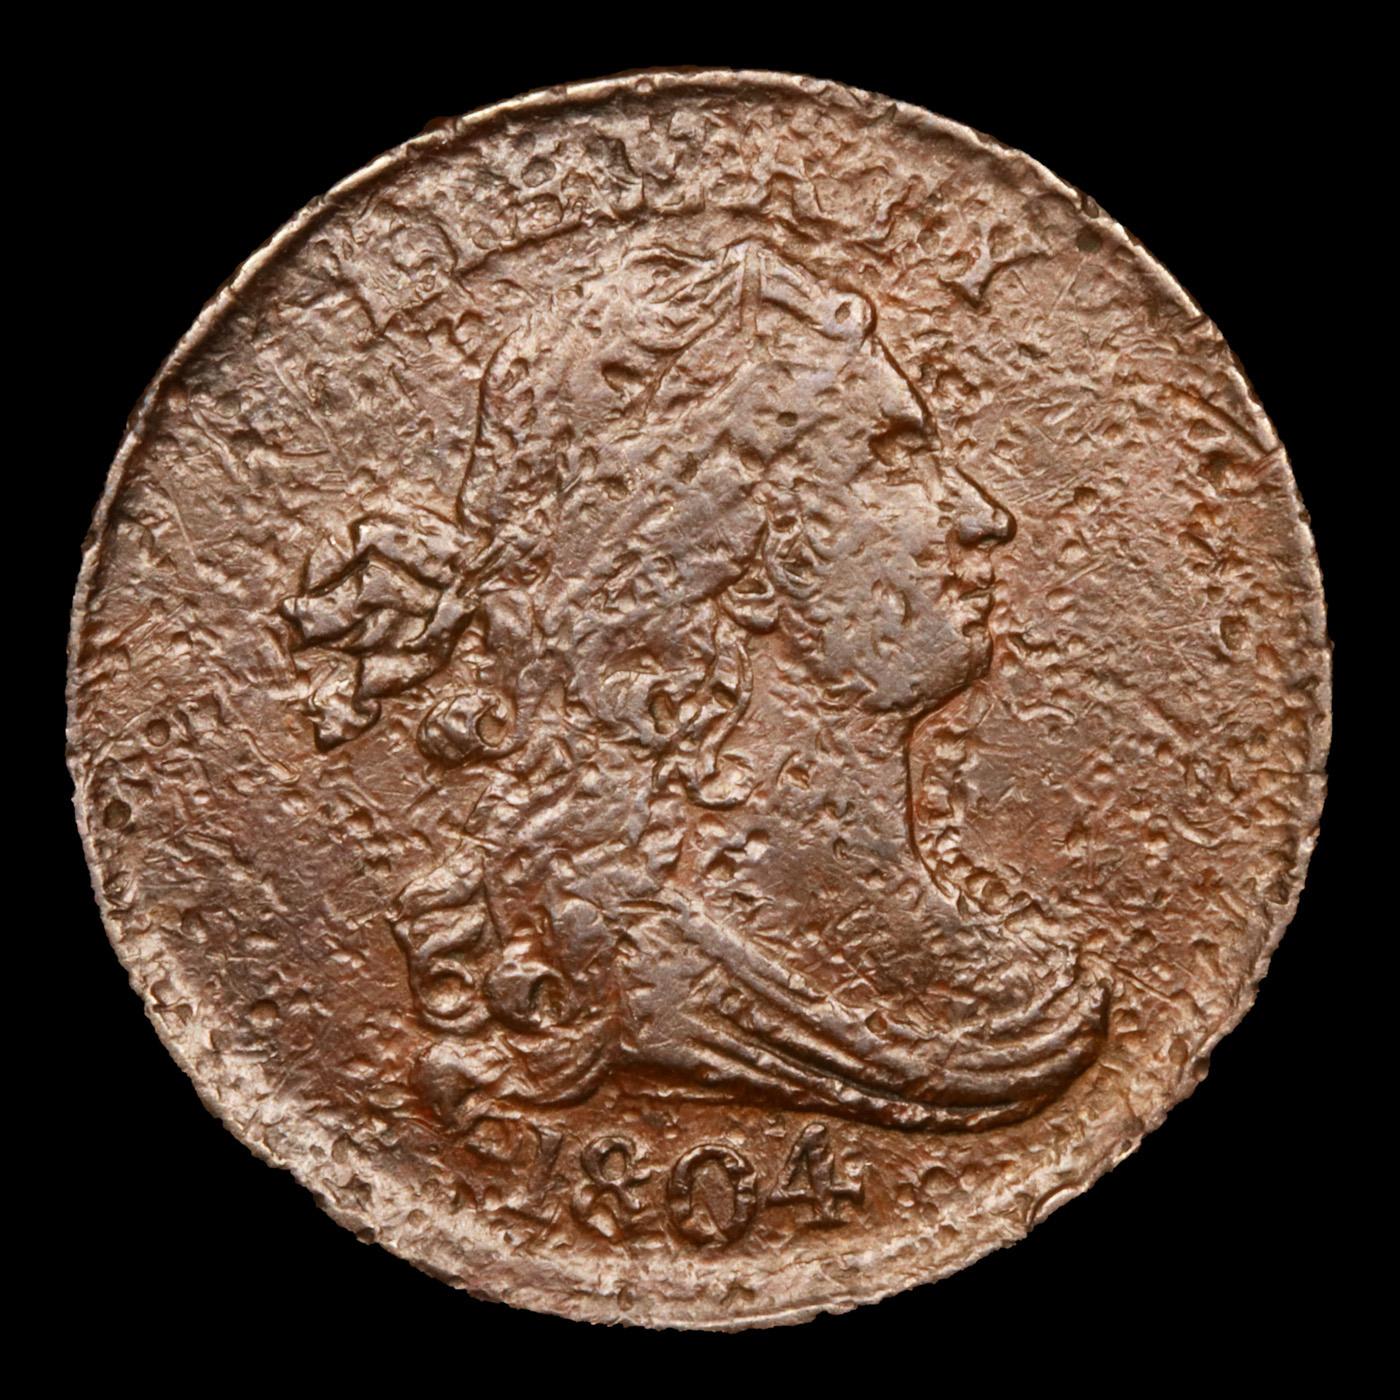 1804 C-10 Draped Bust Half Cent 1/2c Grades xf details